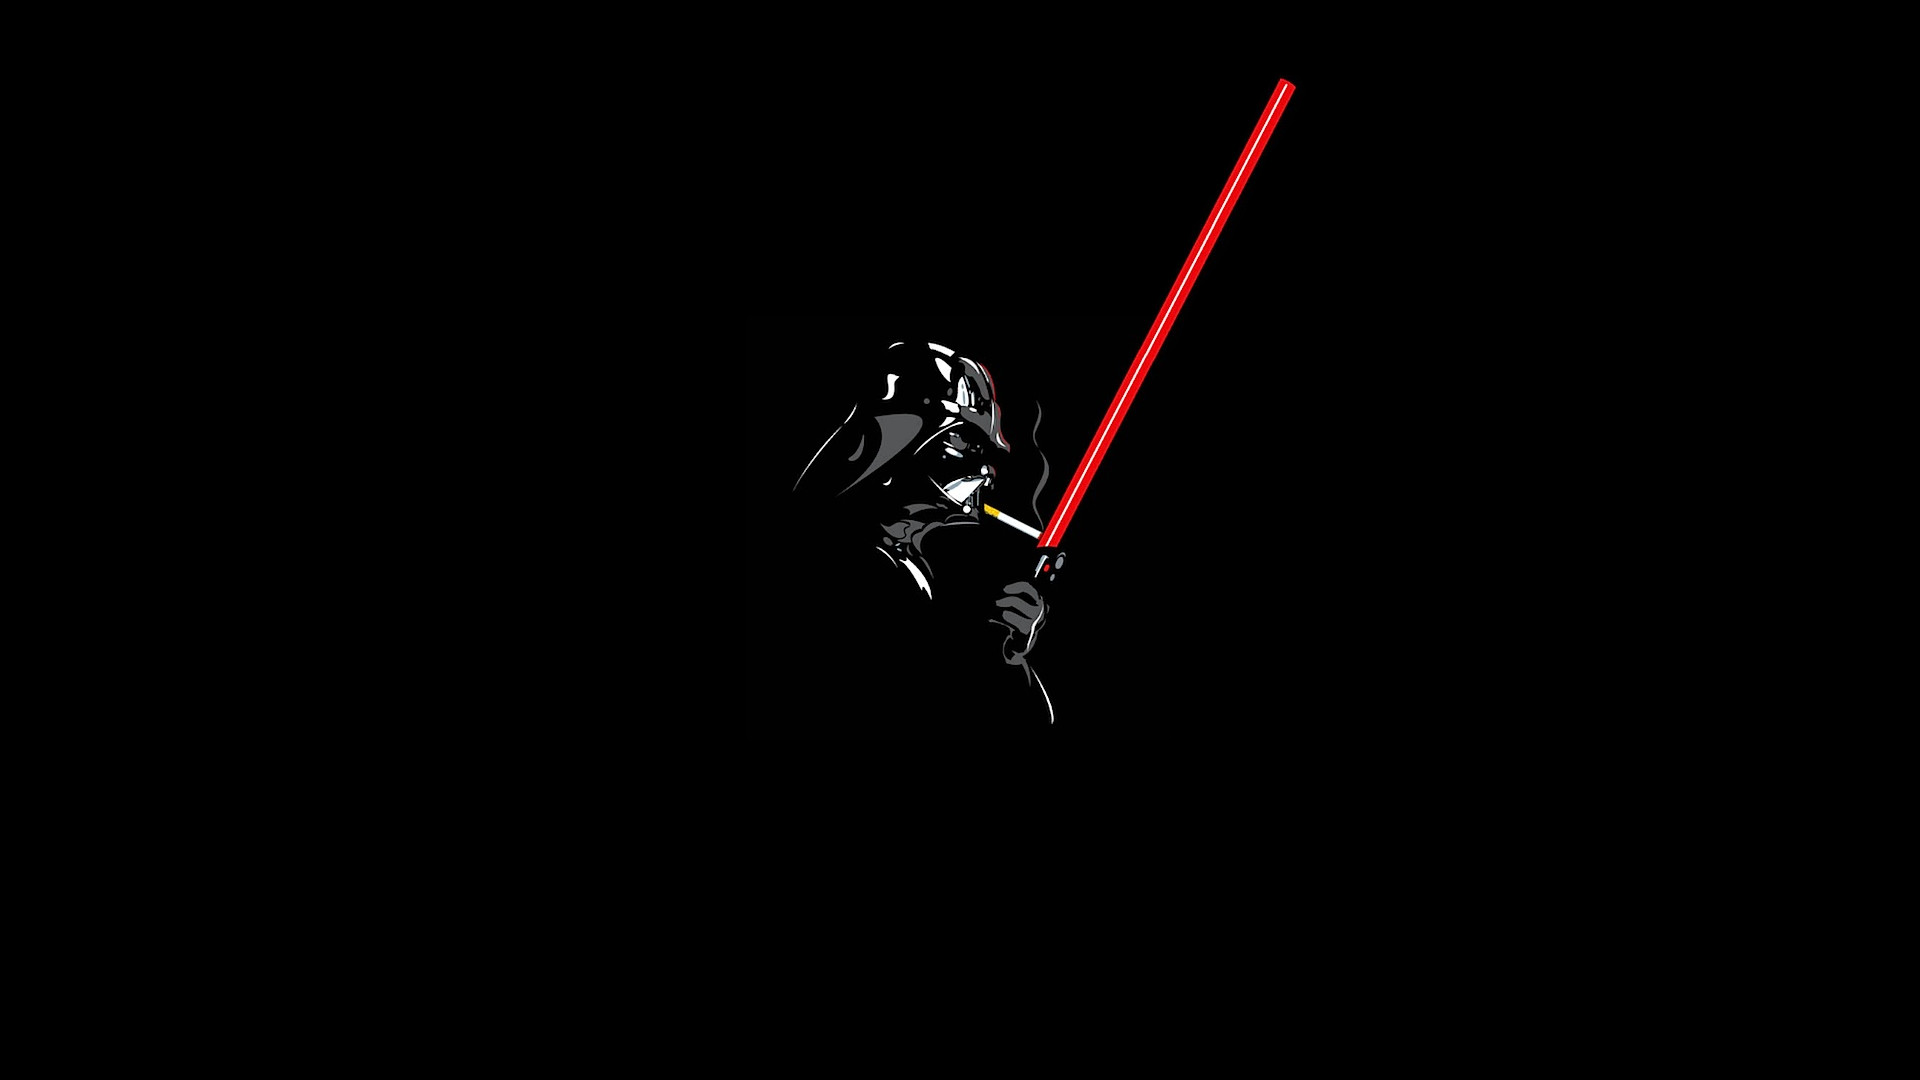 1920x1080 Darth Vader lighting a cigarette off his lightsaber [Wallpaper] ...